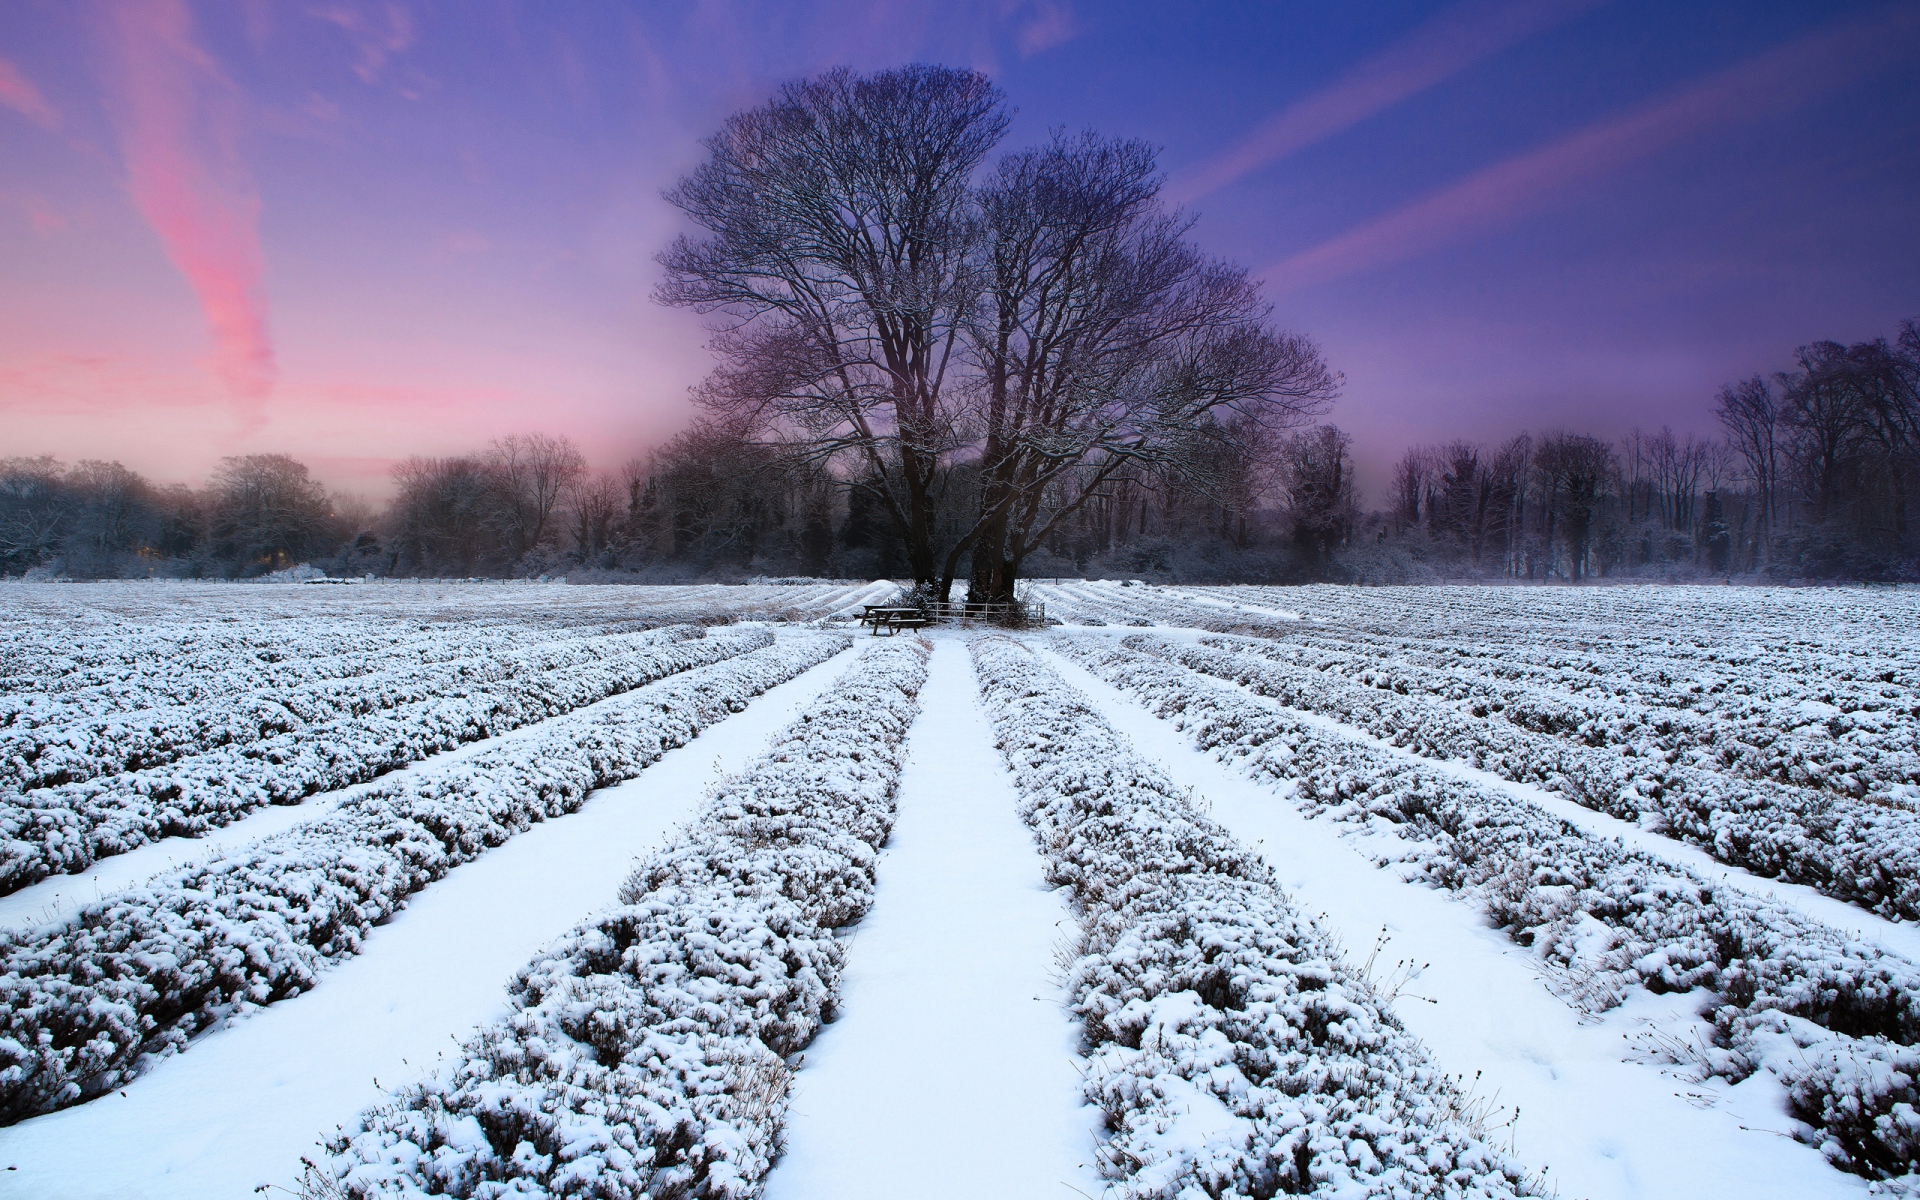 Картинки Зима, поле, звания, снег, дерево, вечер, сирень фото и обои на рабочий стол